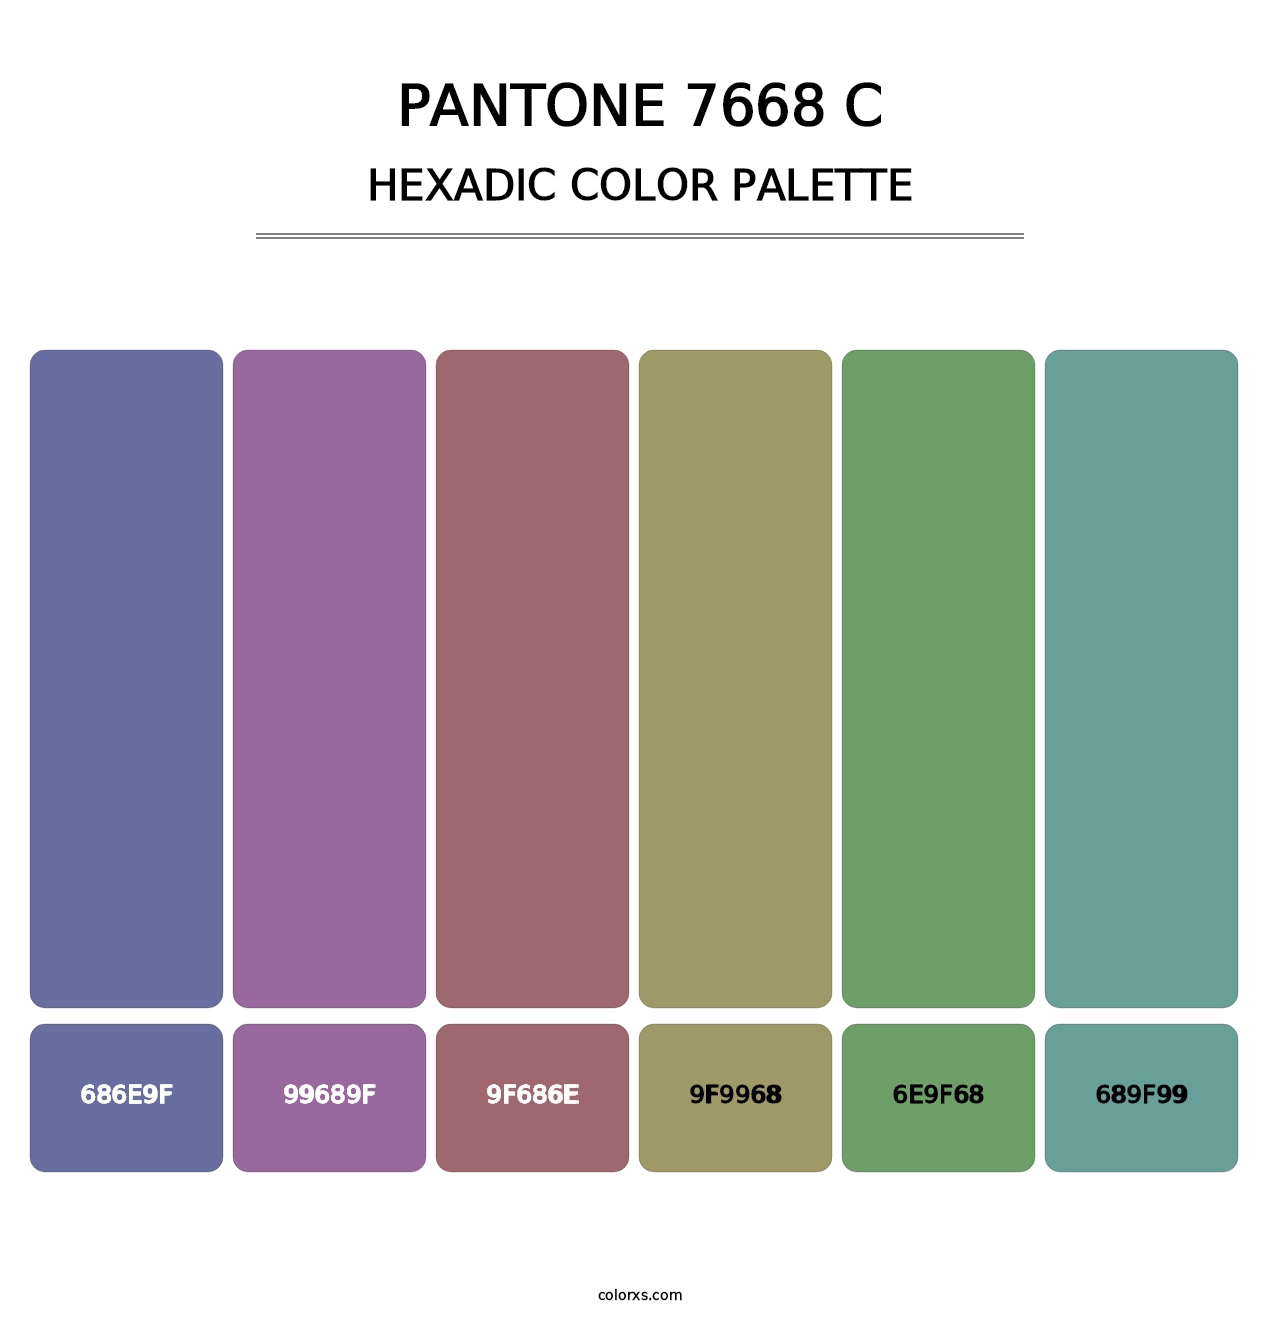 PANTONE 7668 C - Hexadic Color Palette